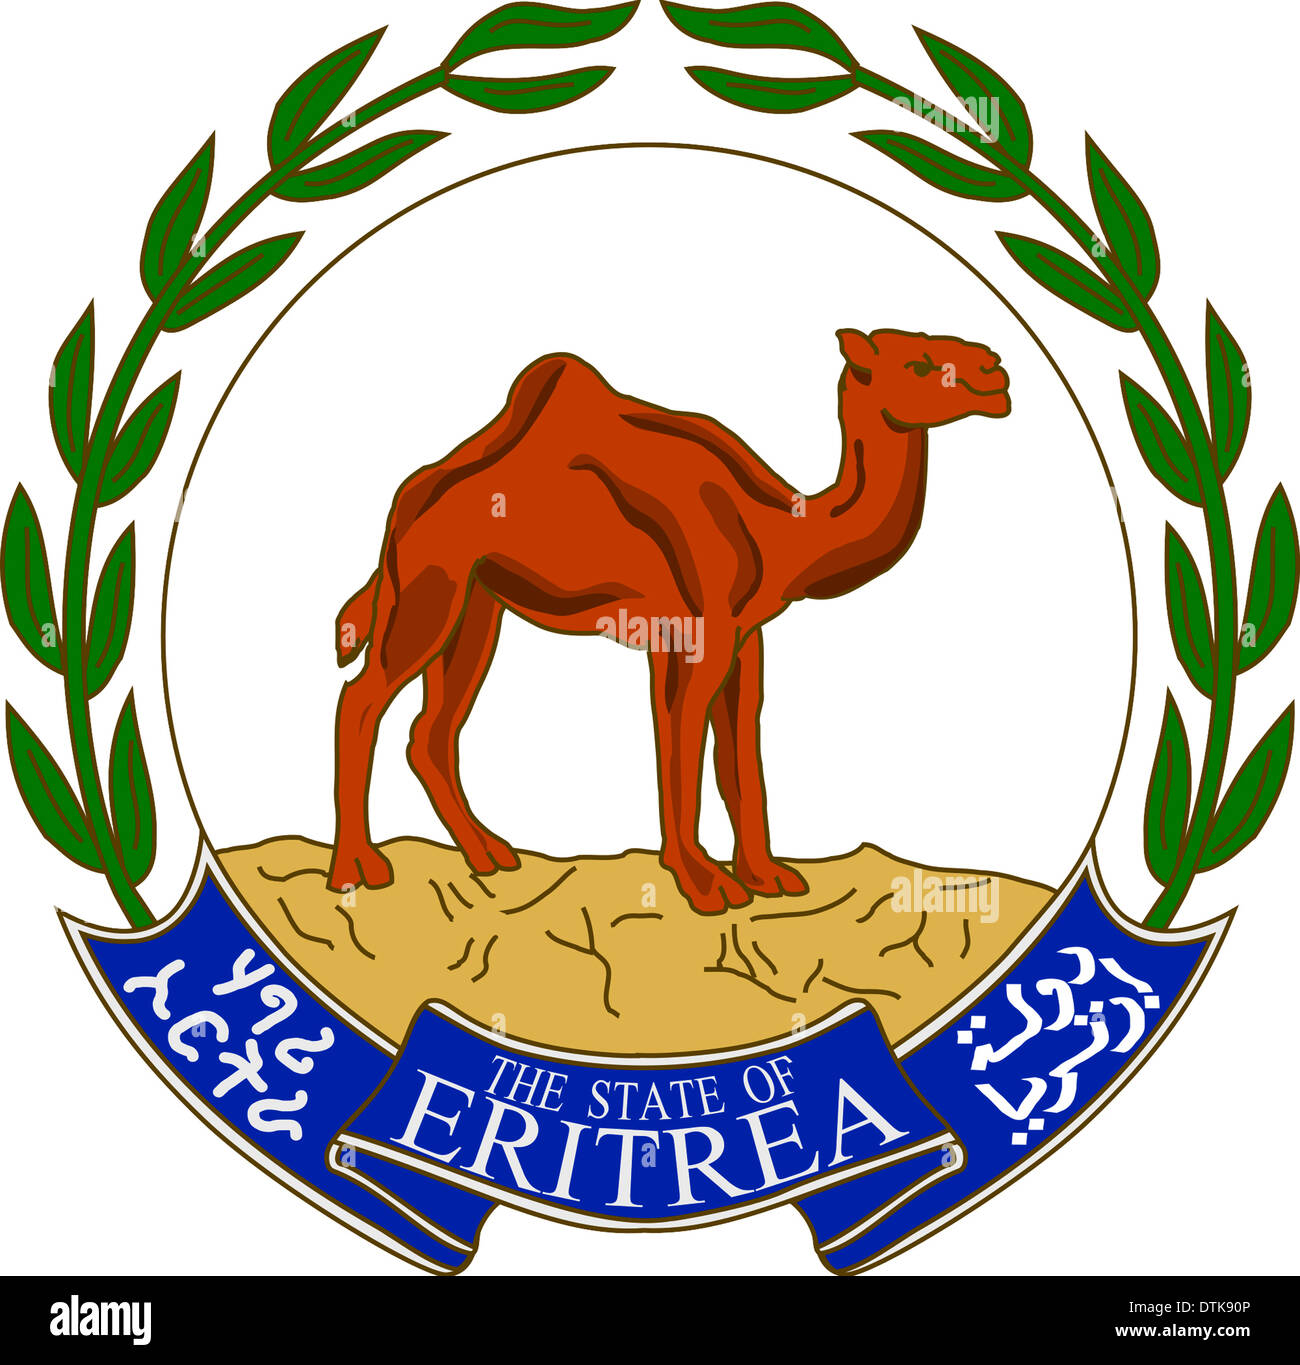 Wappen des Staates Eritrea. Stockfoto